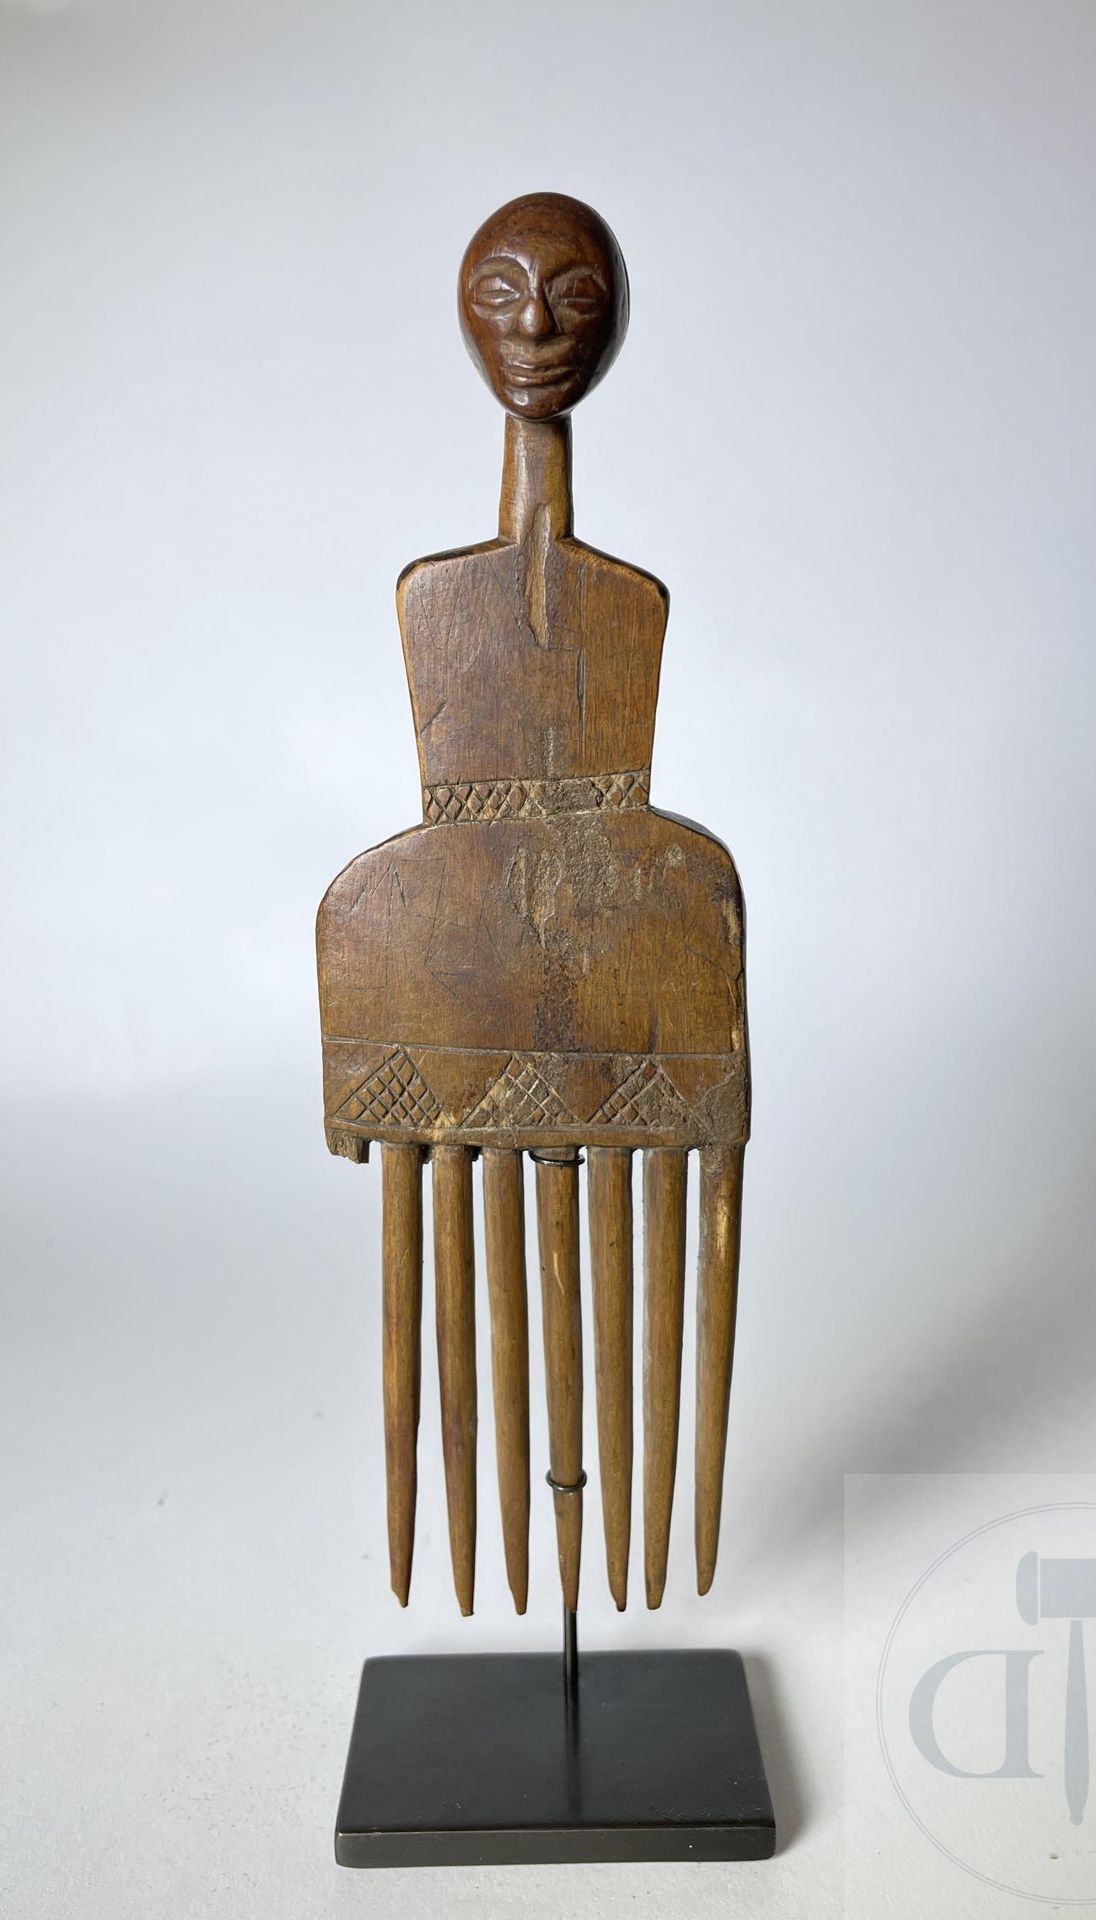 Null 梳子上面有一个女性形象。 松耶，刚果民主共和国。 雕刻的木材。 约1920年。 非常罕见。 高18厘米。 包括底座：高21厘米。



出处。

让娜&hellip;